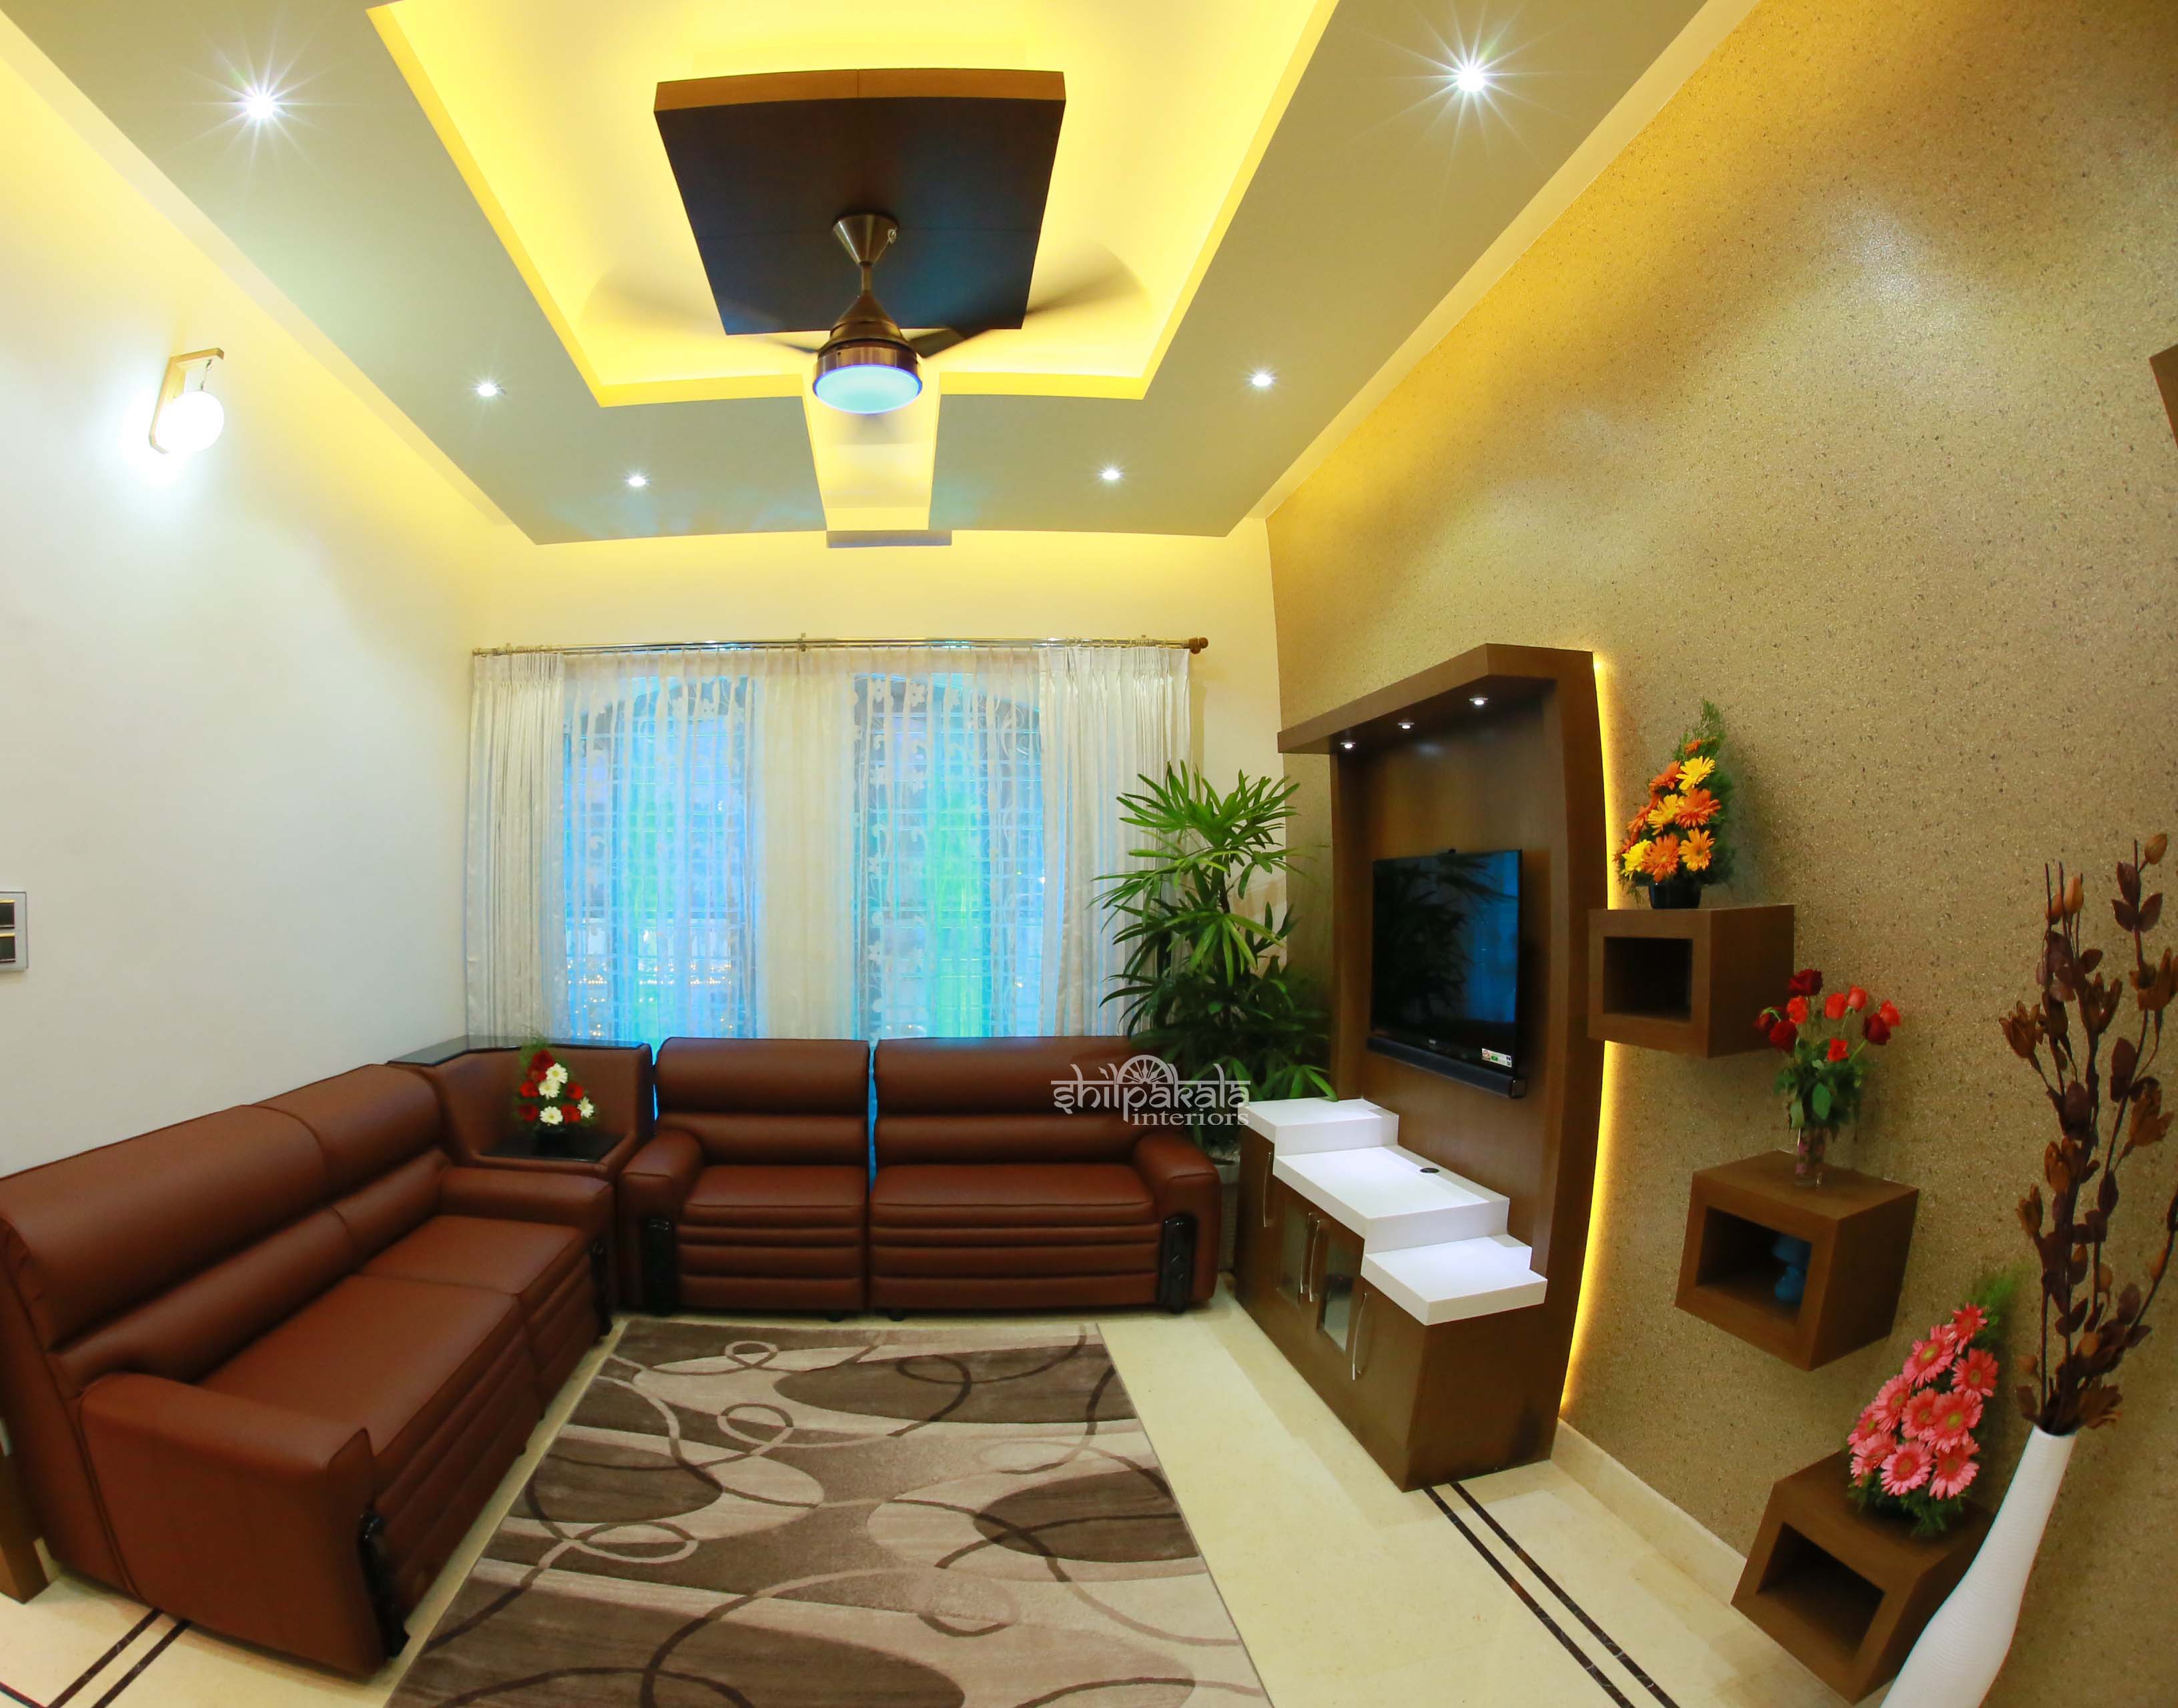 Shilpakala Interiors Home Interior Designs Kerala